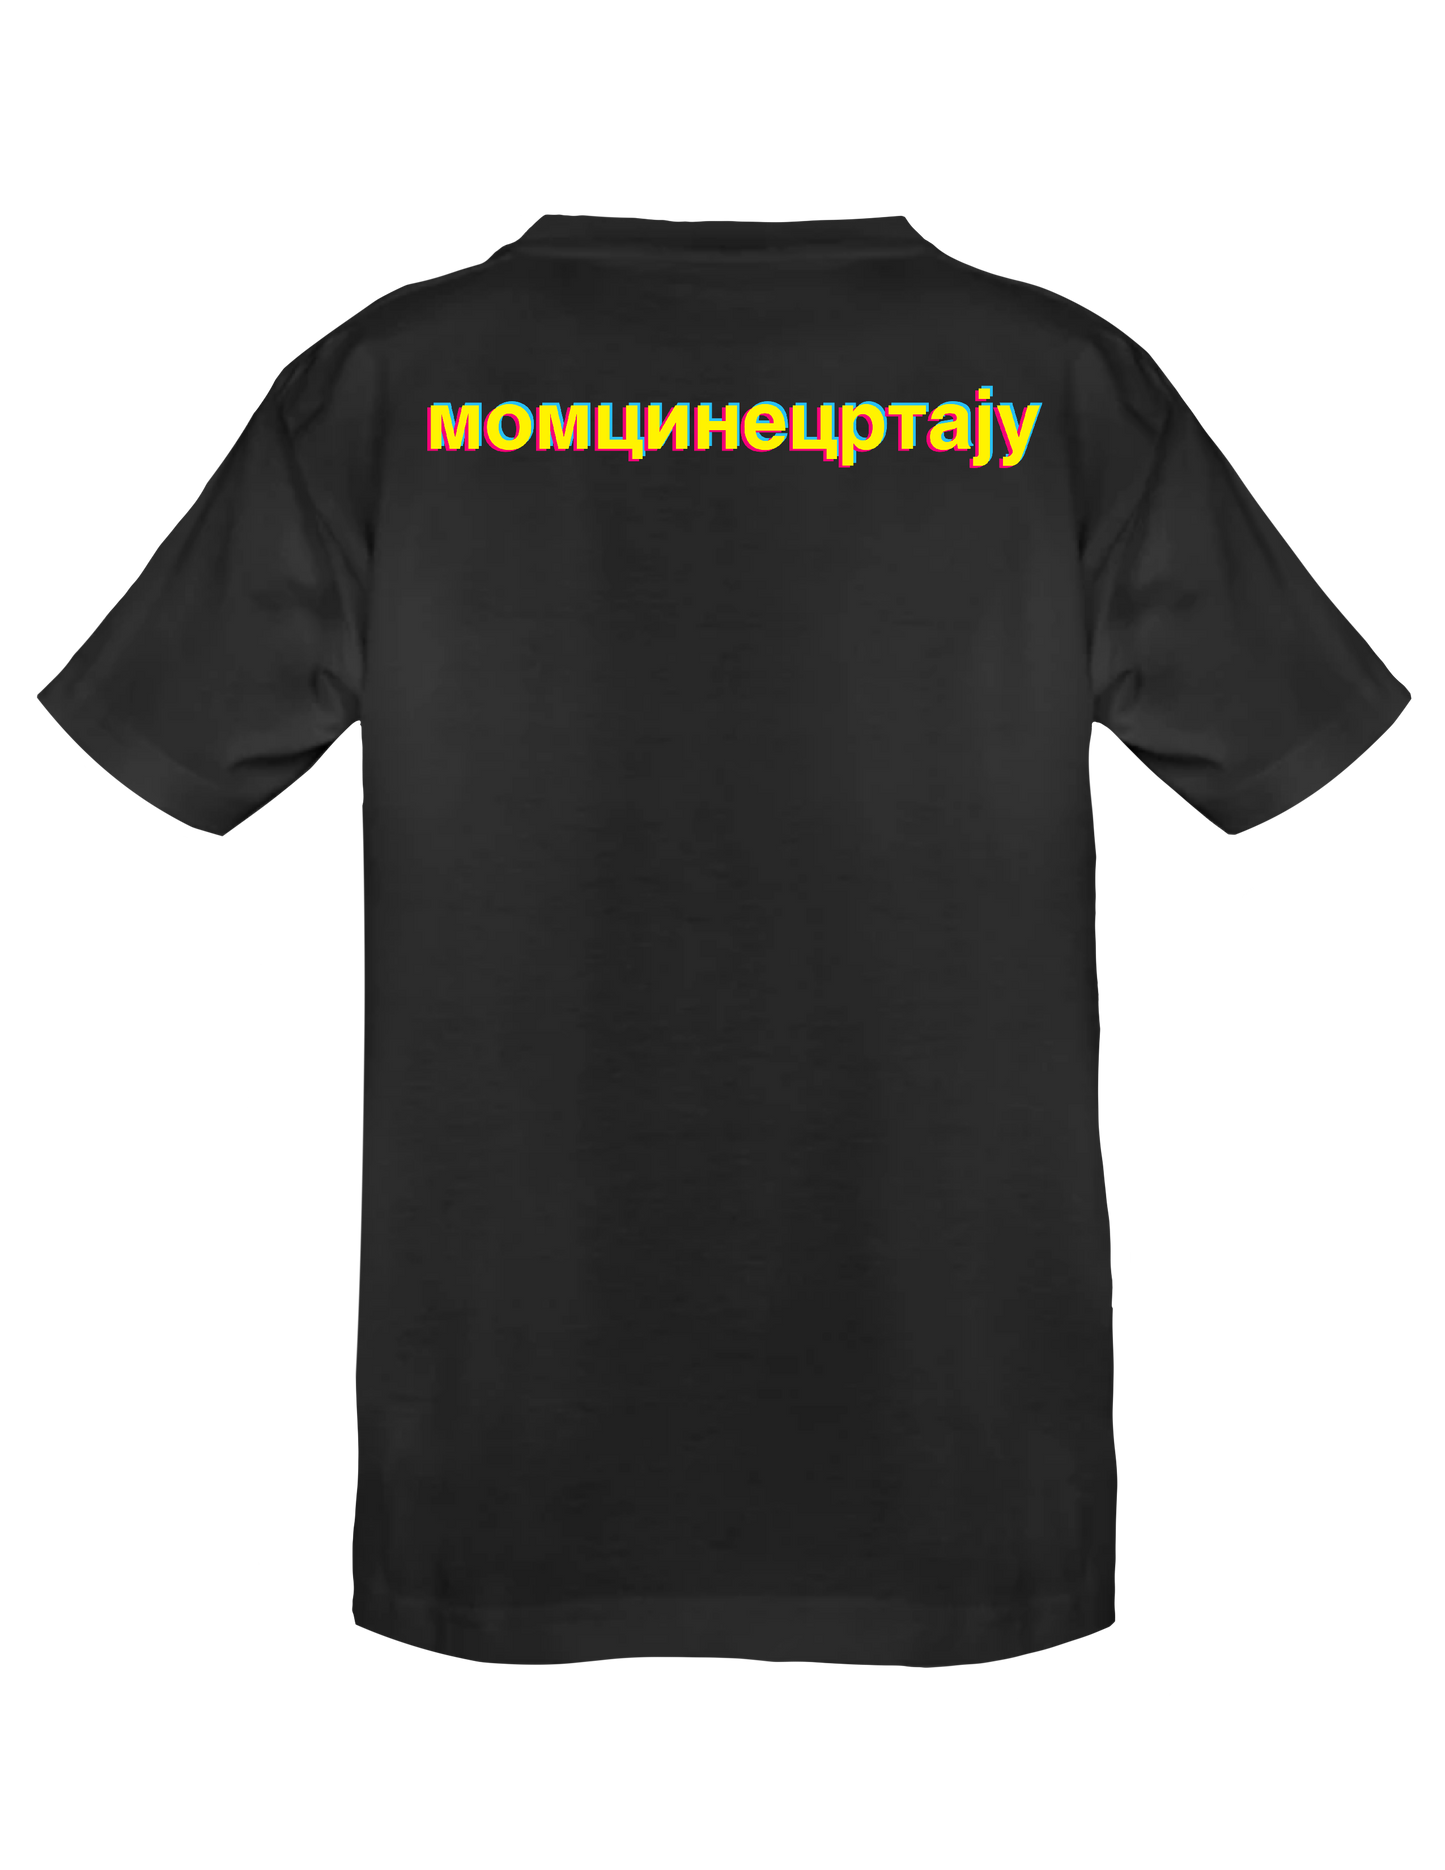 ATOMIC DYSTOPIA - ROBO FACE (Black) - T-Shirt by BOYSDONTDRAW